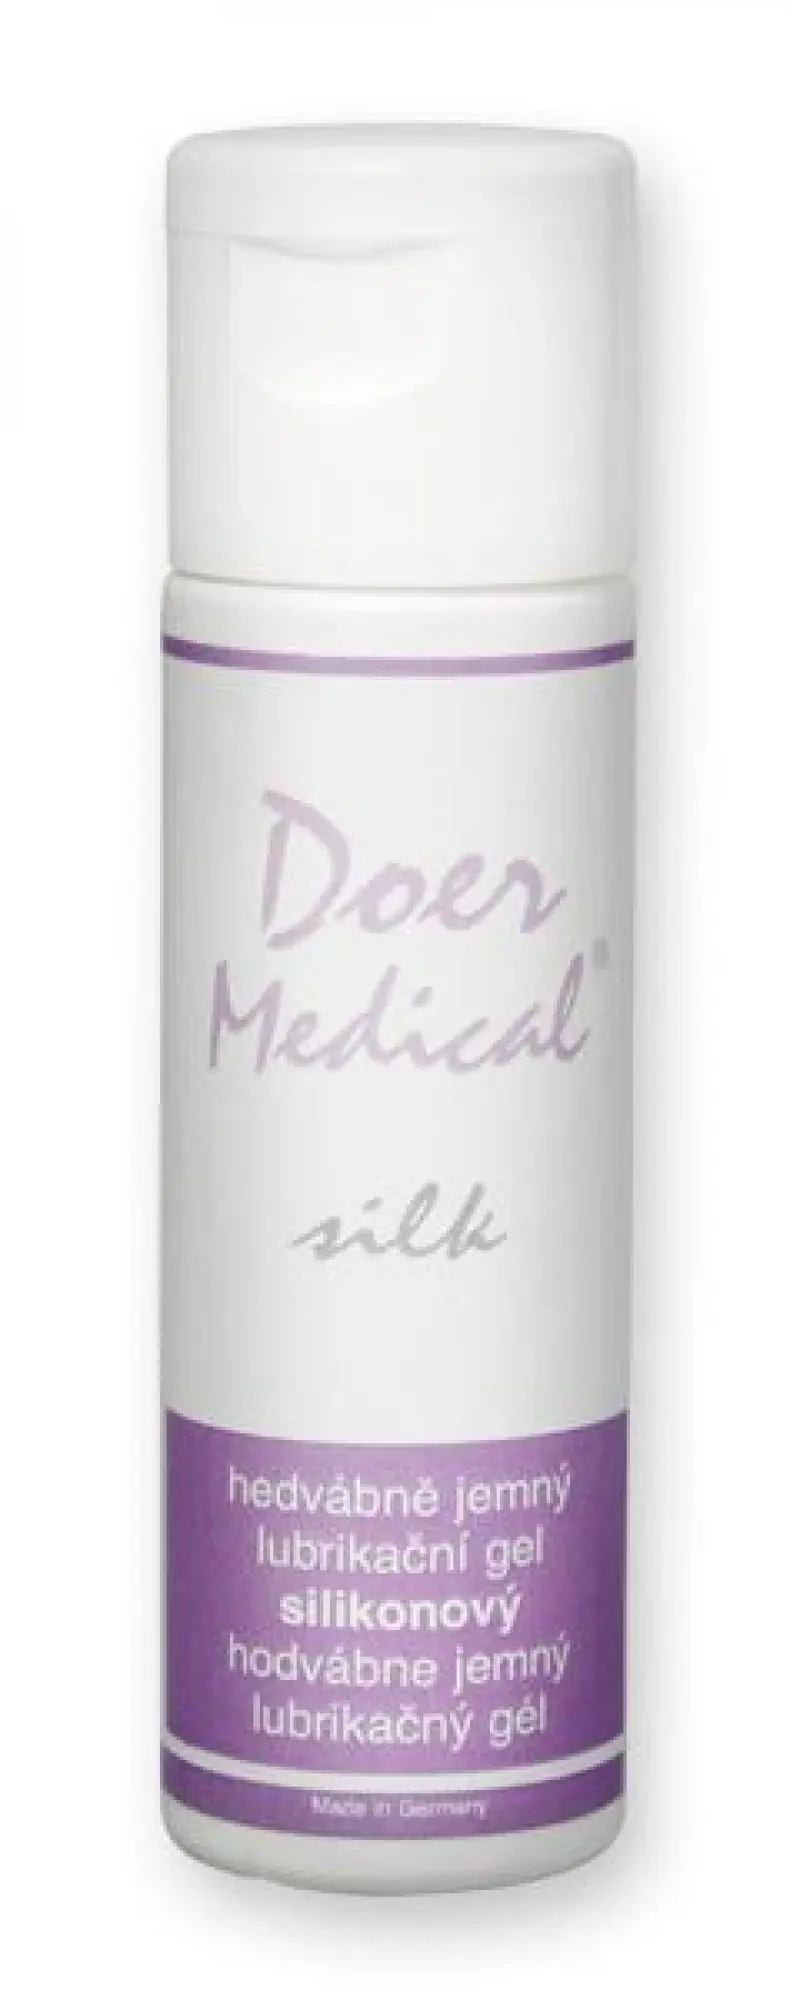 Doer Medical Silk silikonový lubrikační gel 100 ml